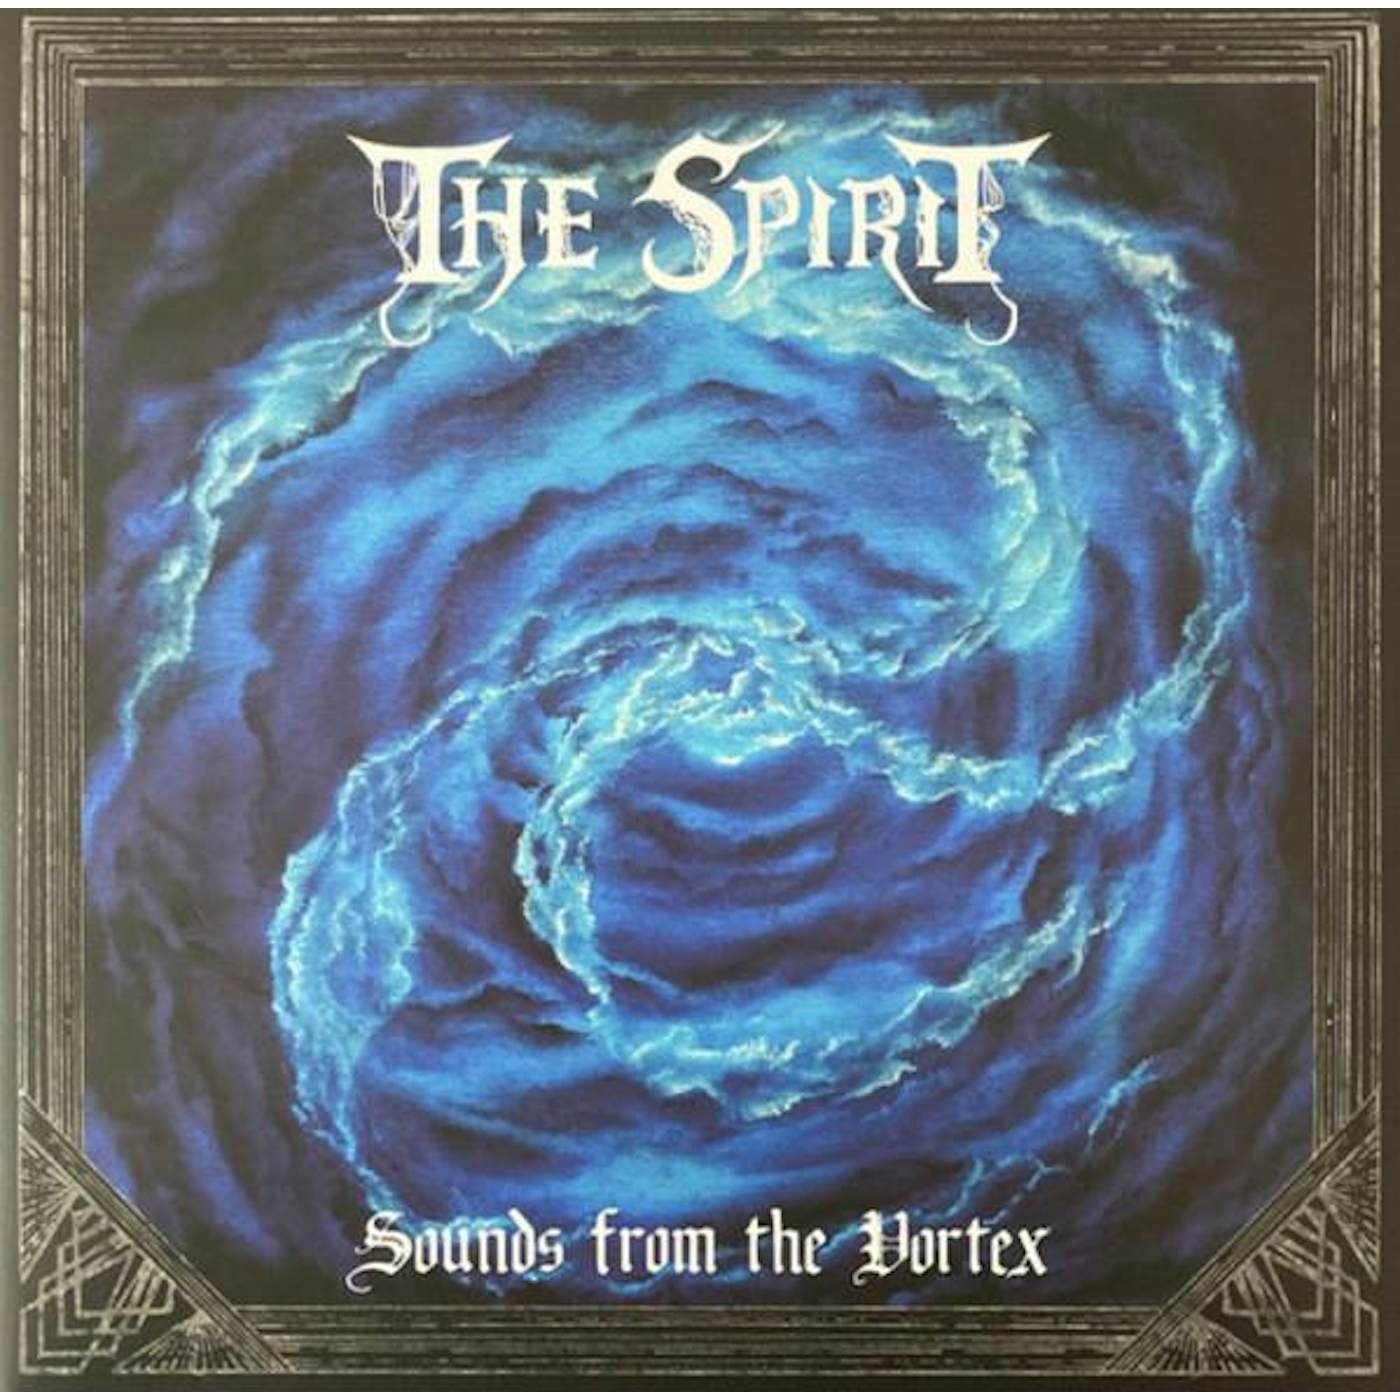 Spirit SOUNDS FROM THE VORTEX Vinyl Record